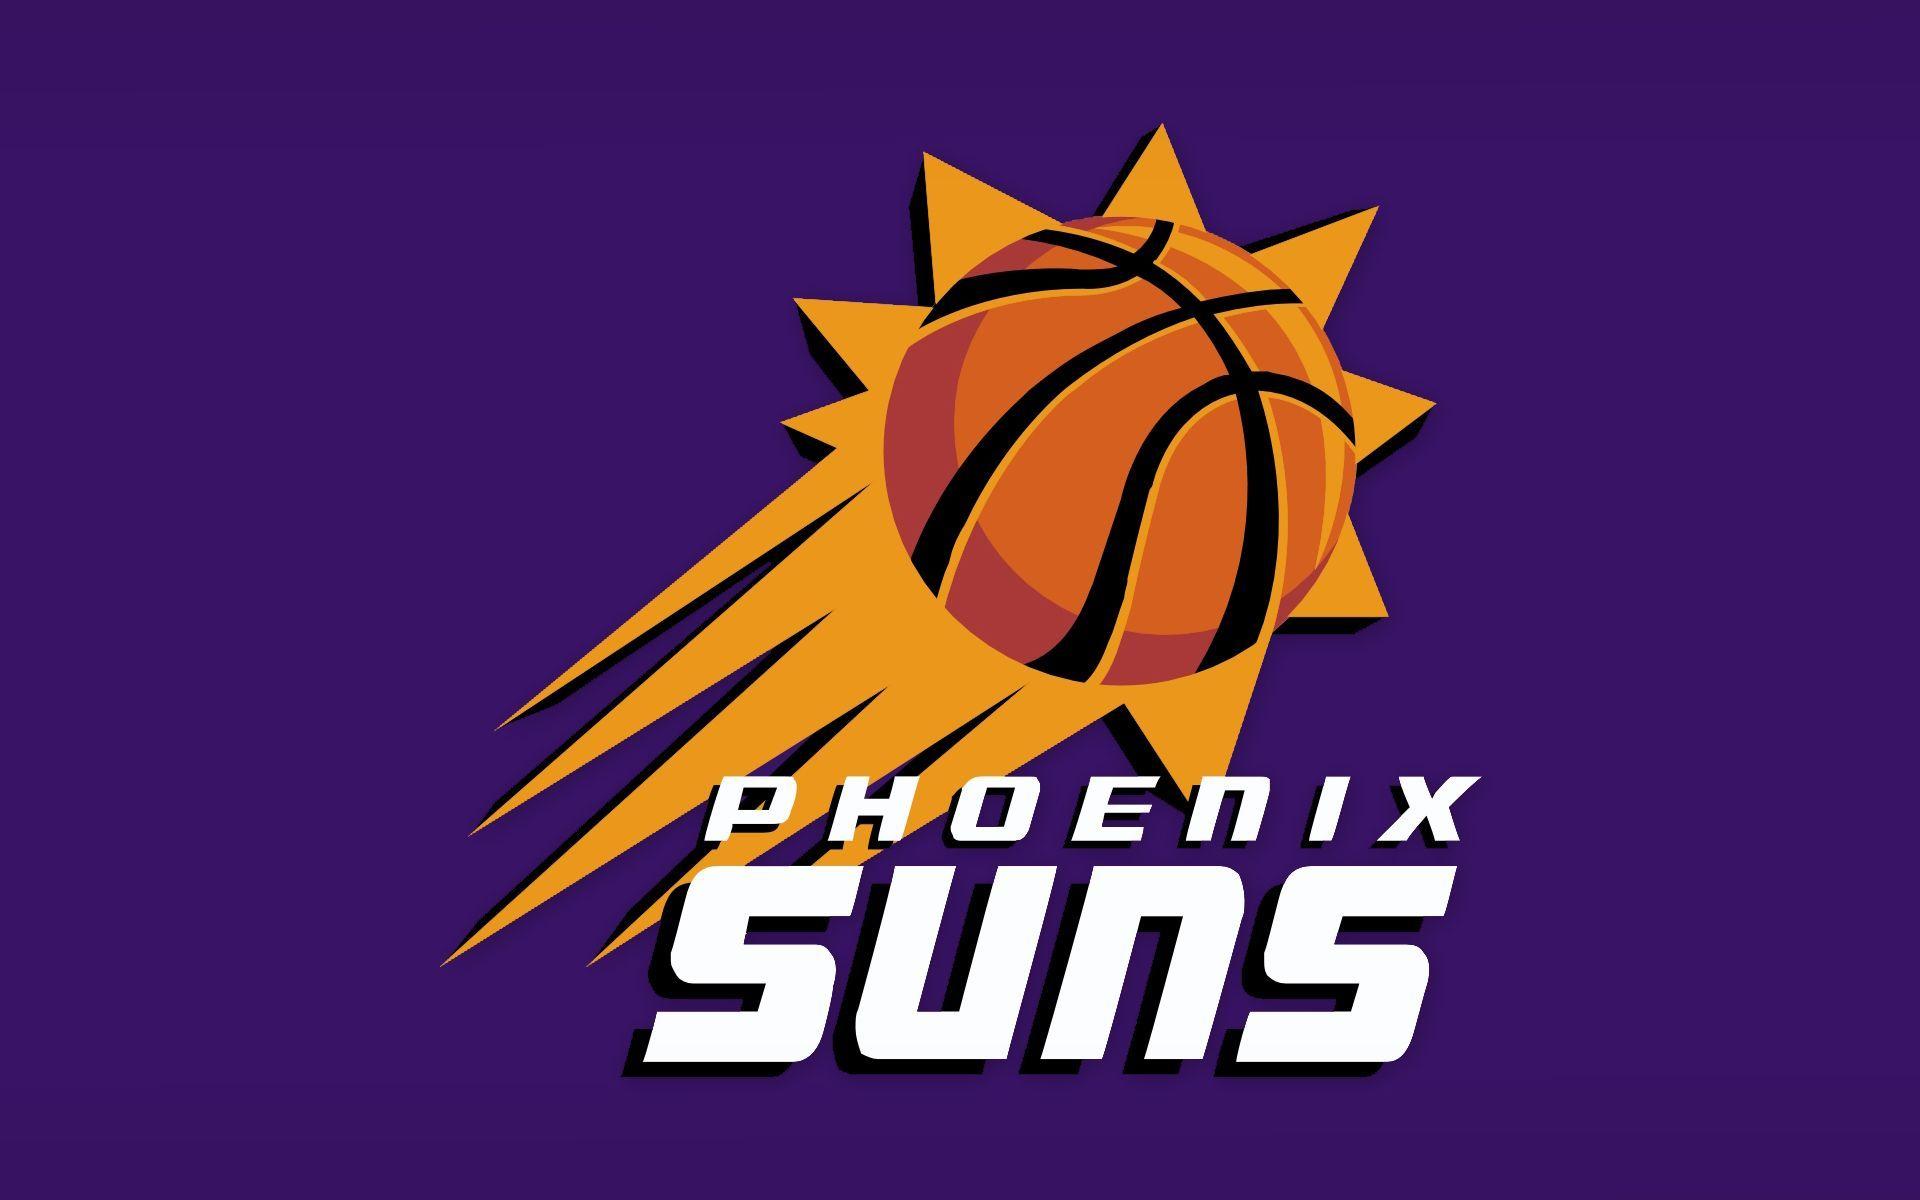 Transparent Phoenix Suns Logo Inspirational designs, illustrations